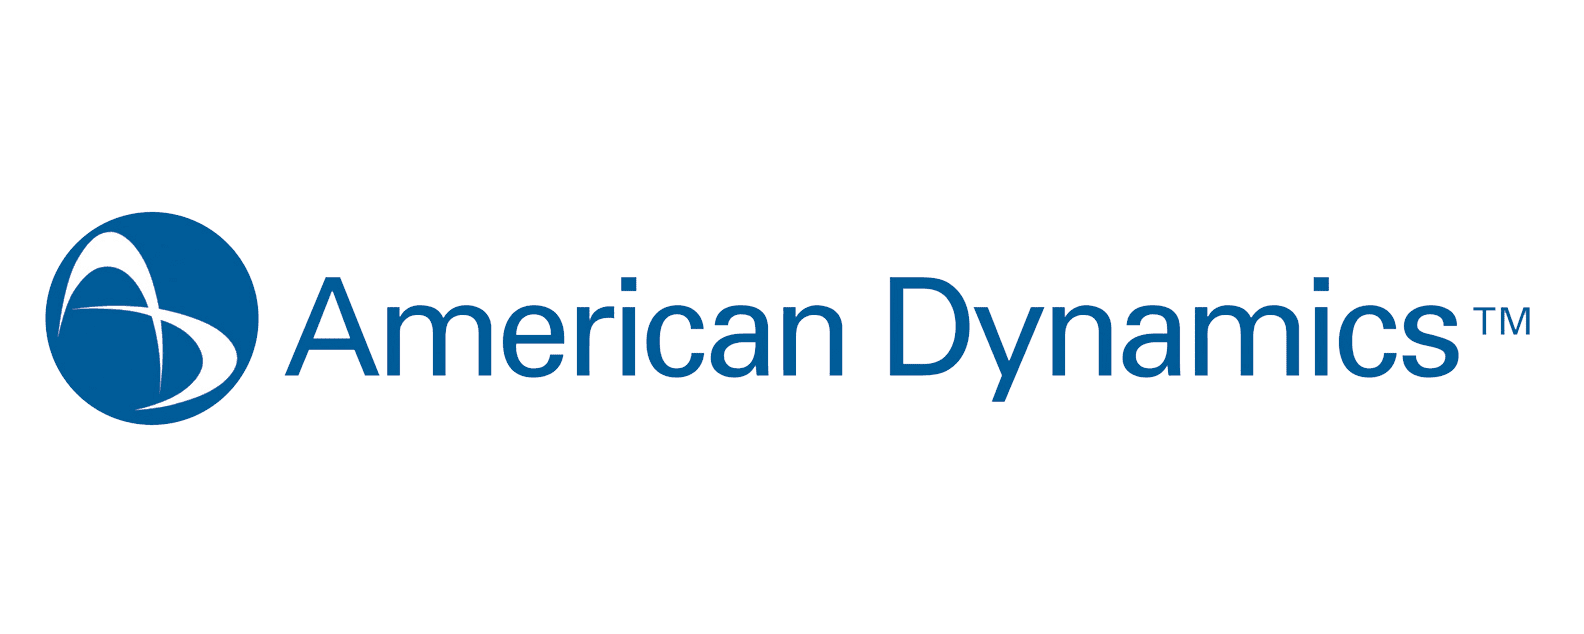 American Dynamics logo